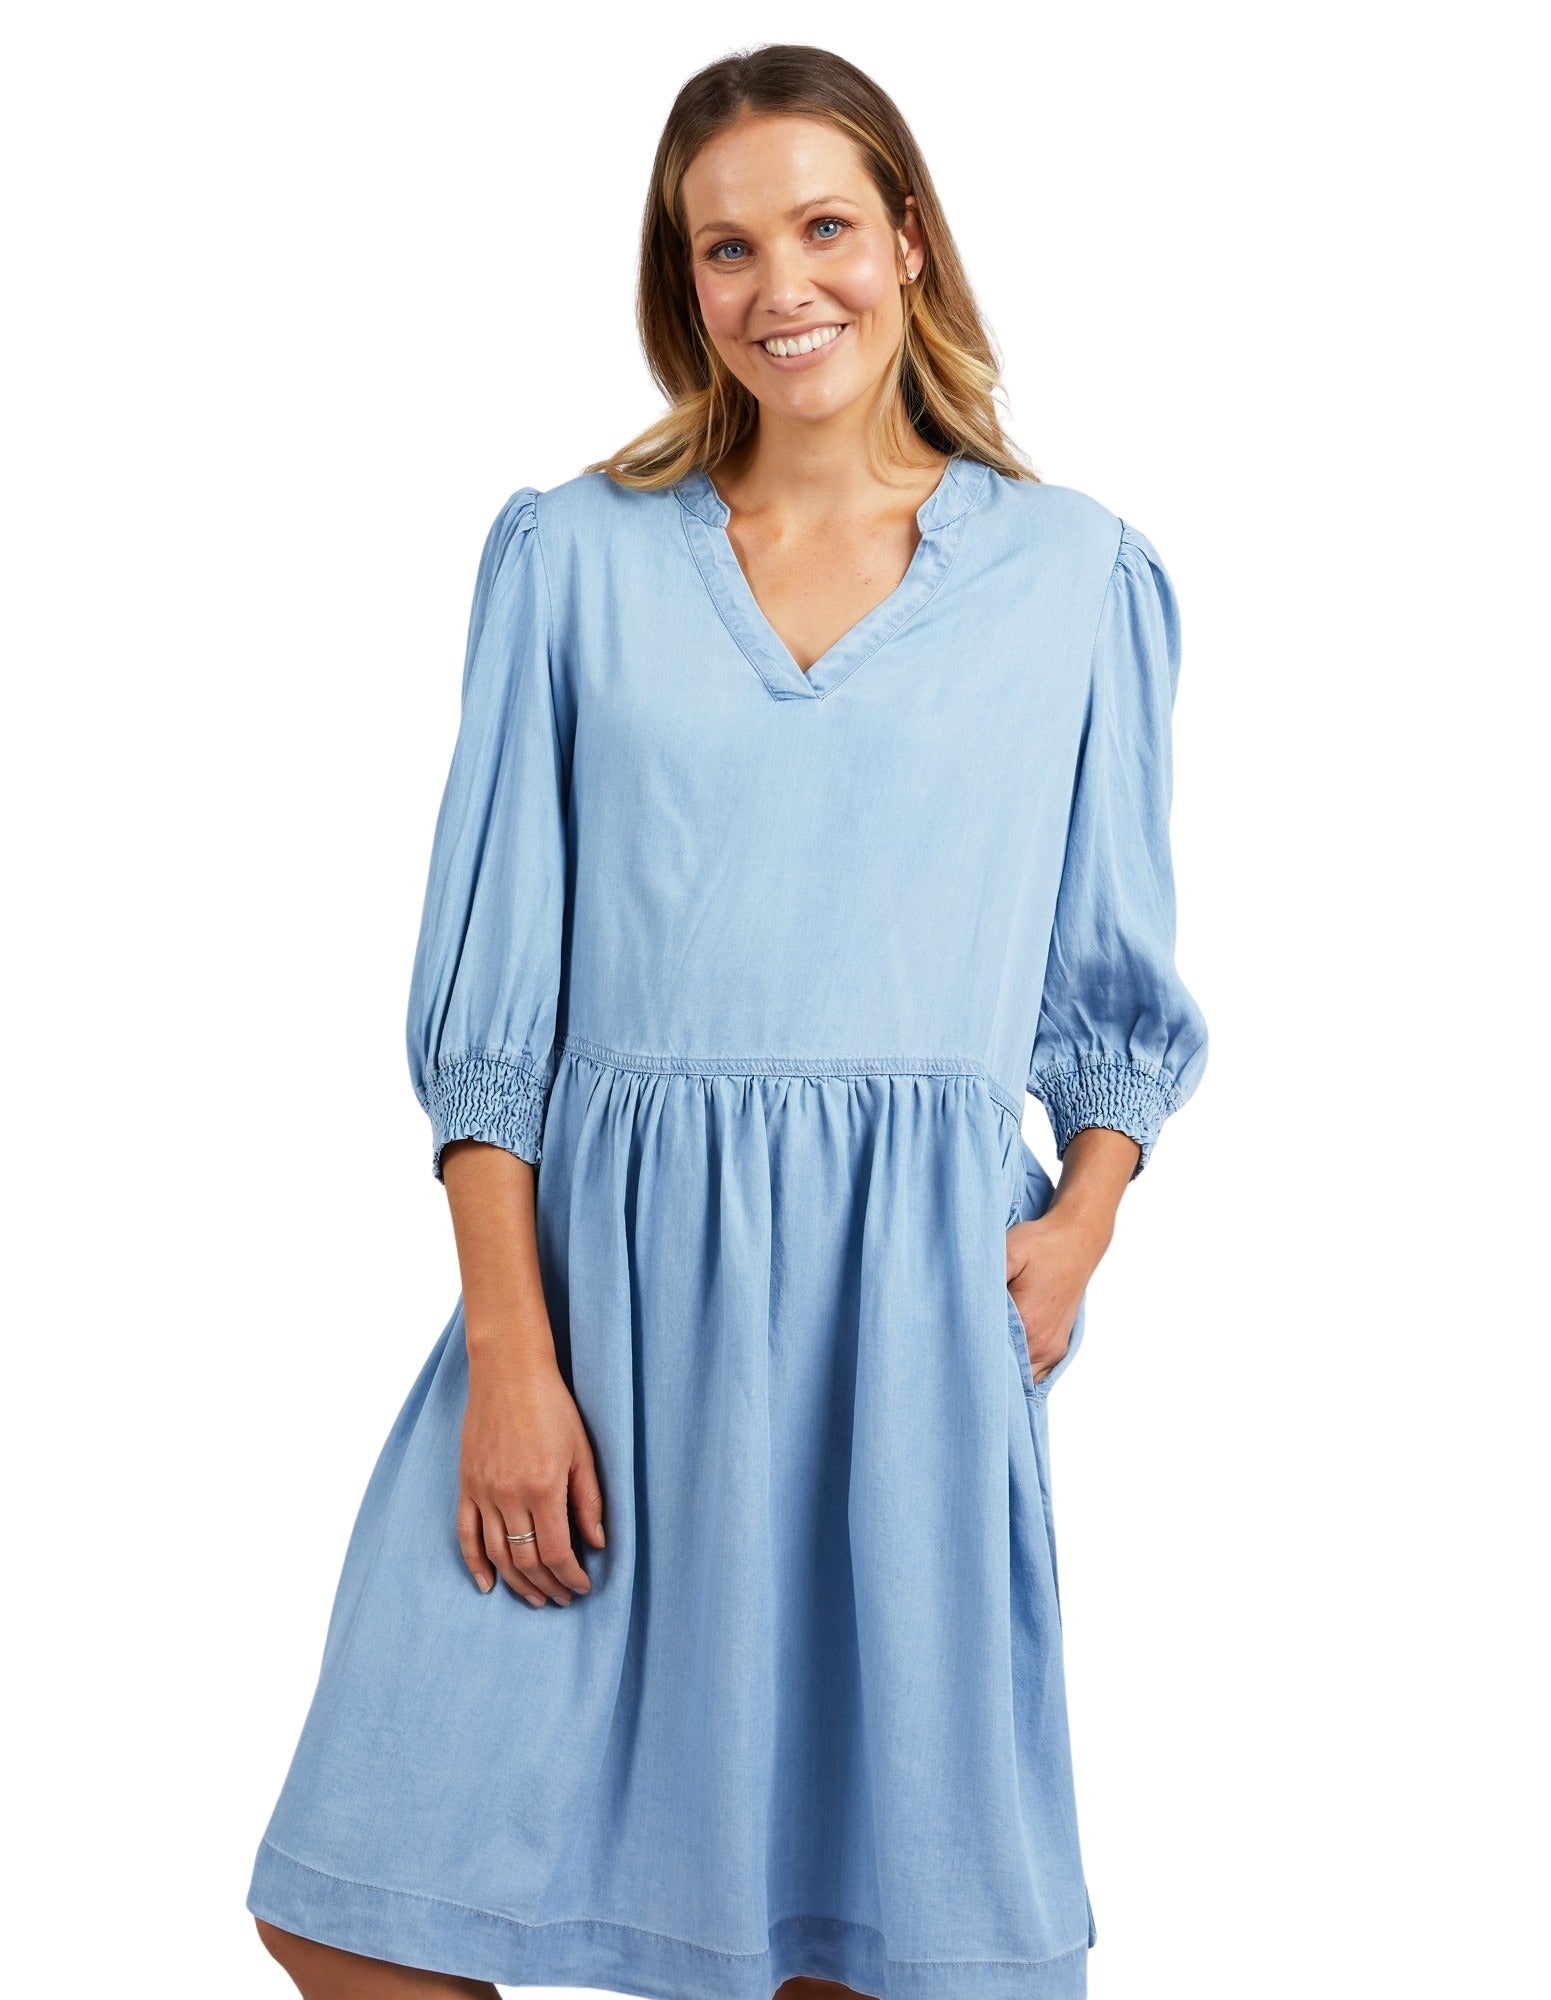 Elm - Shanee Chambray Dress - Blue Wash - Last One Size 12!